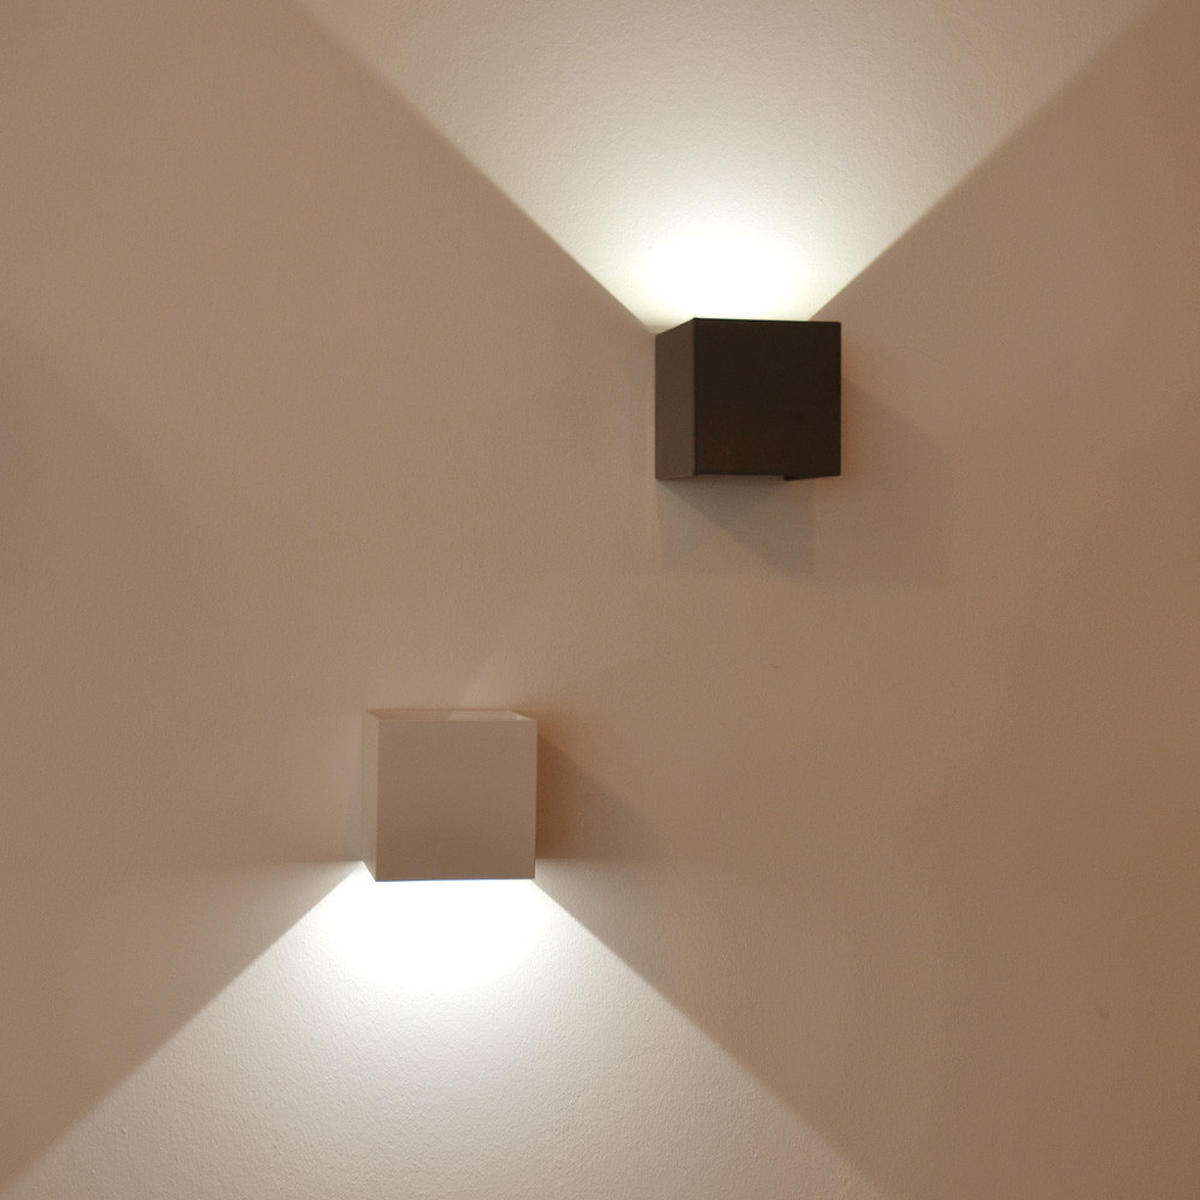 jetzt Edelstahl Quadratisch LED-WANDLAMPE online s.luce Ixa ➤ nur